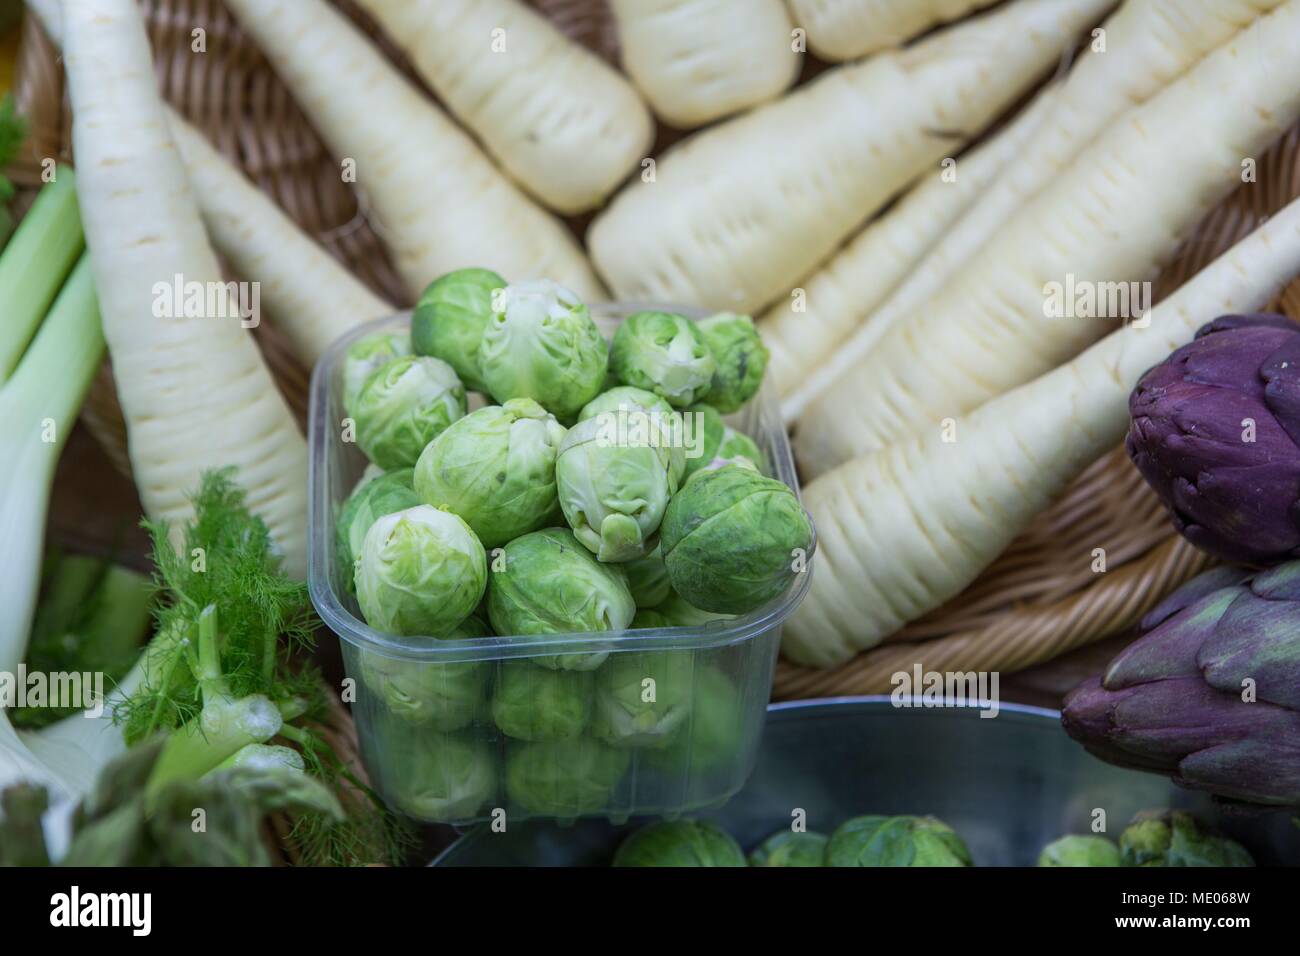 Paris, comerce food, shop, fruits and vegetables market, greengrocer's shop, parsnip, Brussels sprout Stock Photo